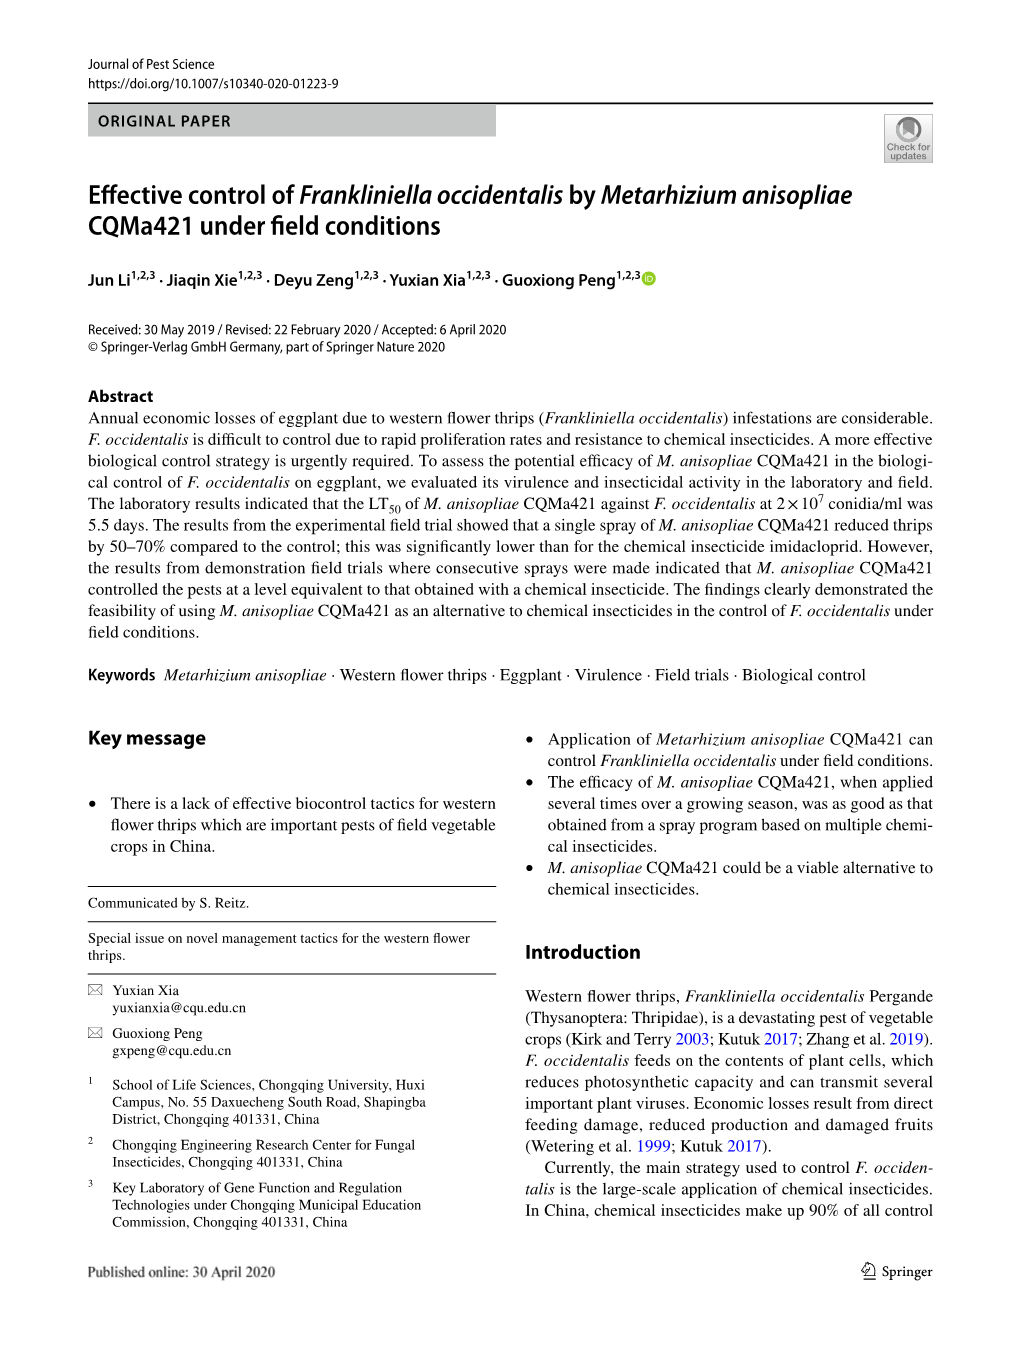 Effective Control of Frankliniella Occidentalis by Metarhizium